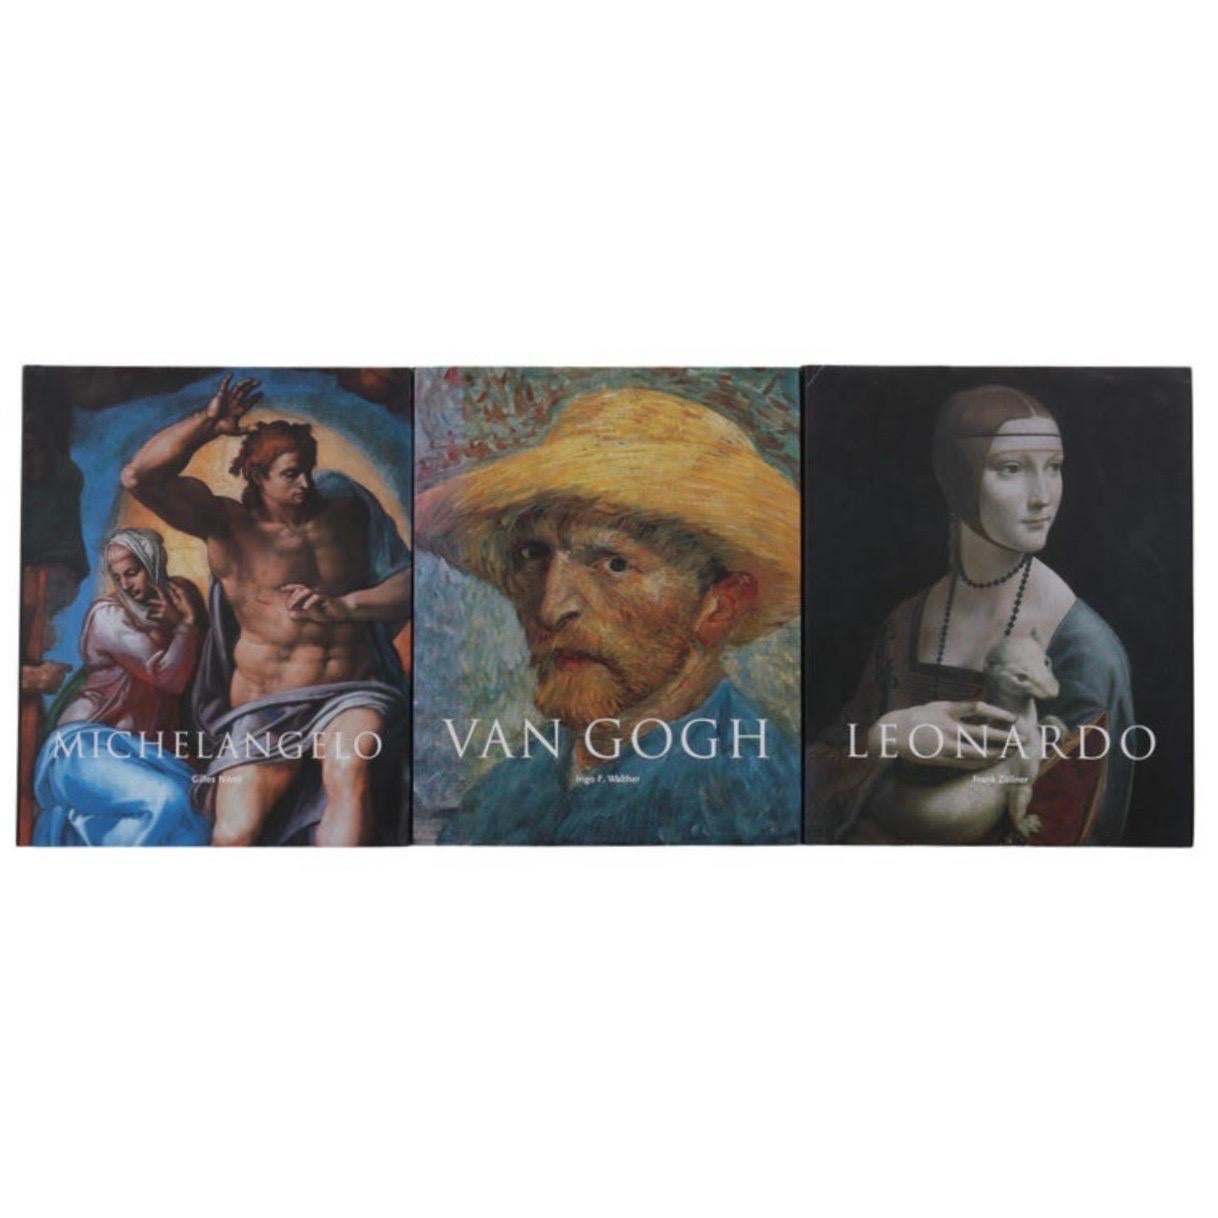 Leonardo, Michelangelo & Van Gogh Books